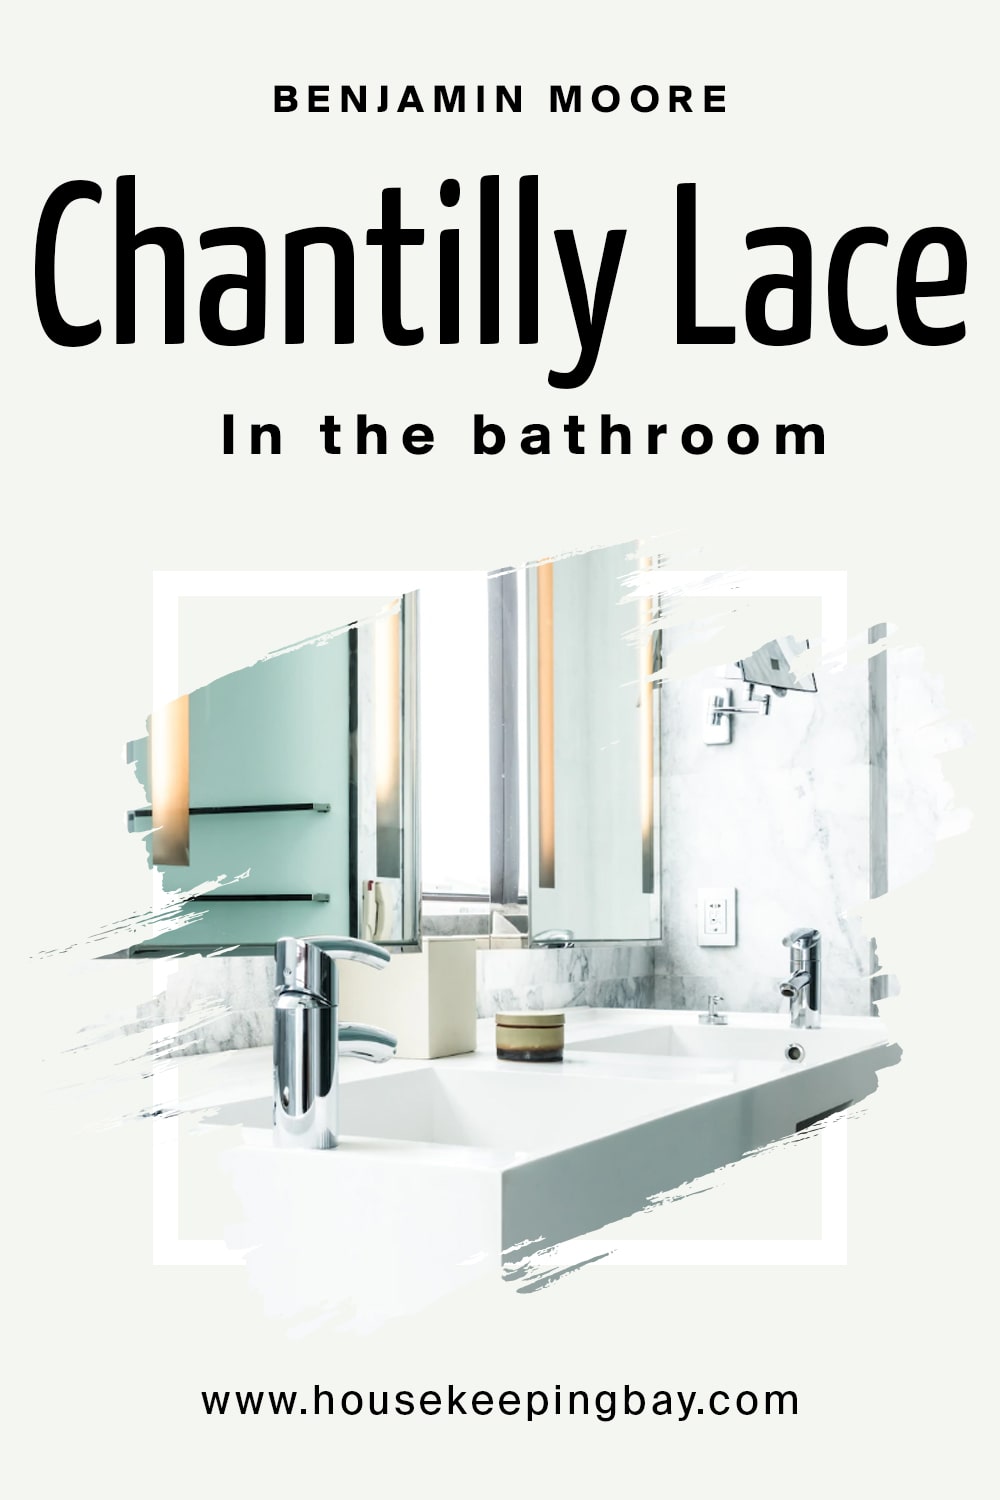 Benjamin Moore. Chantilly Lace In the bathroom